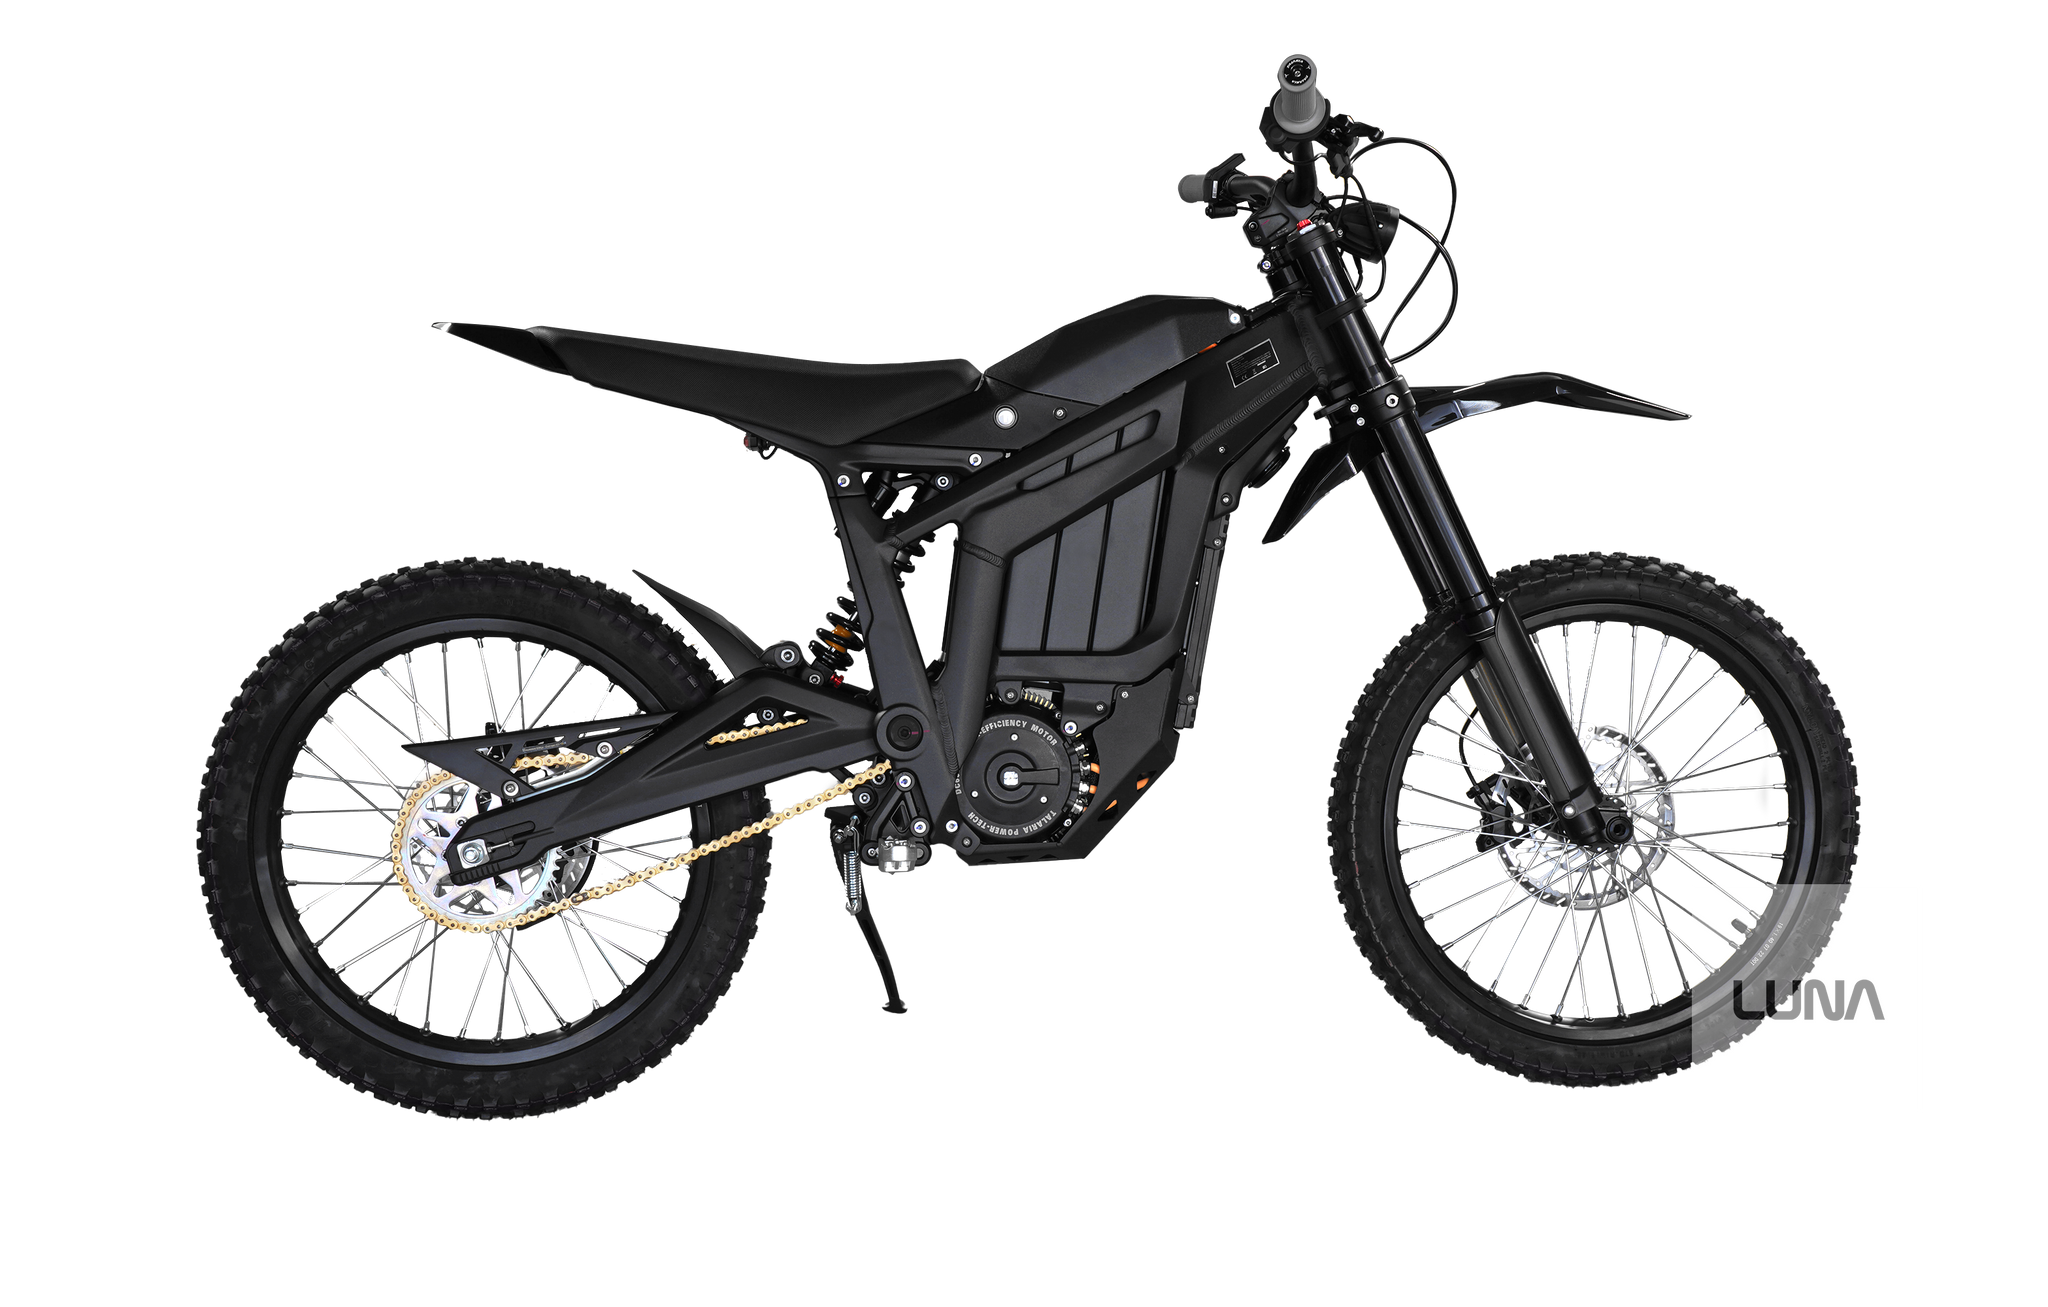 Racing Moto Cross 250cc 2 Stroke Dirt Bike 21/18 Wheel with CE